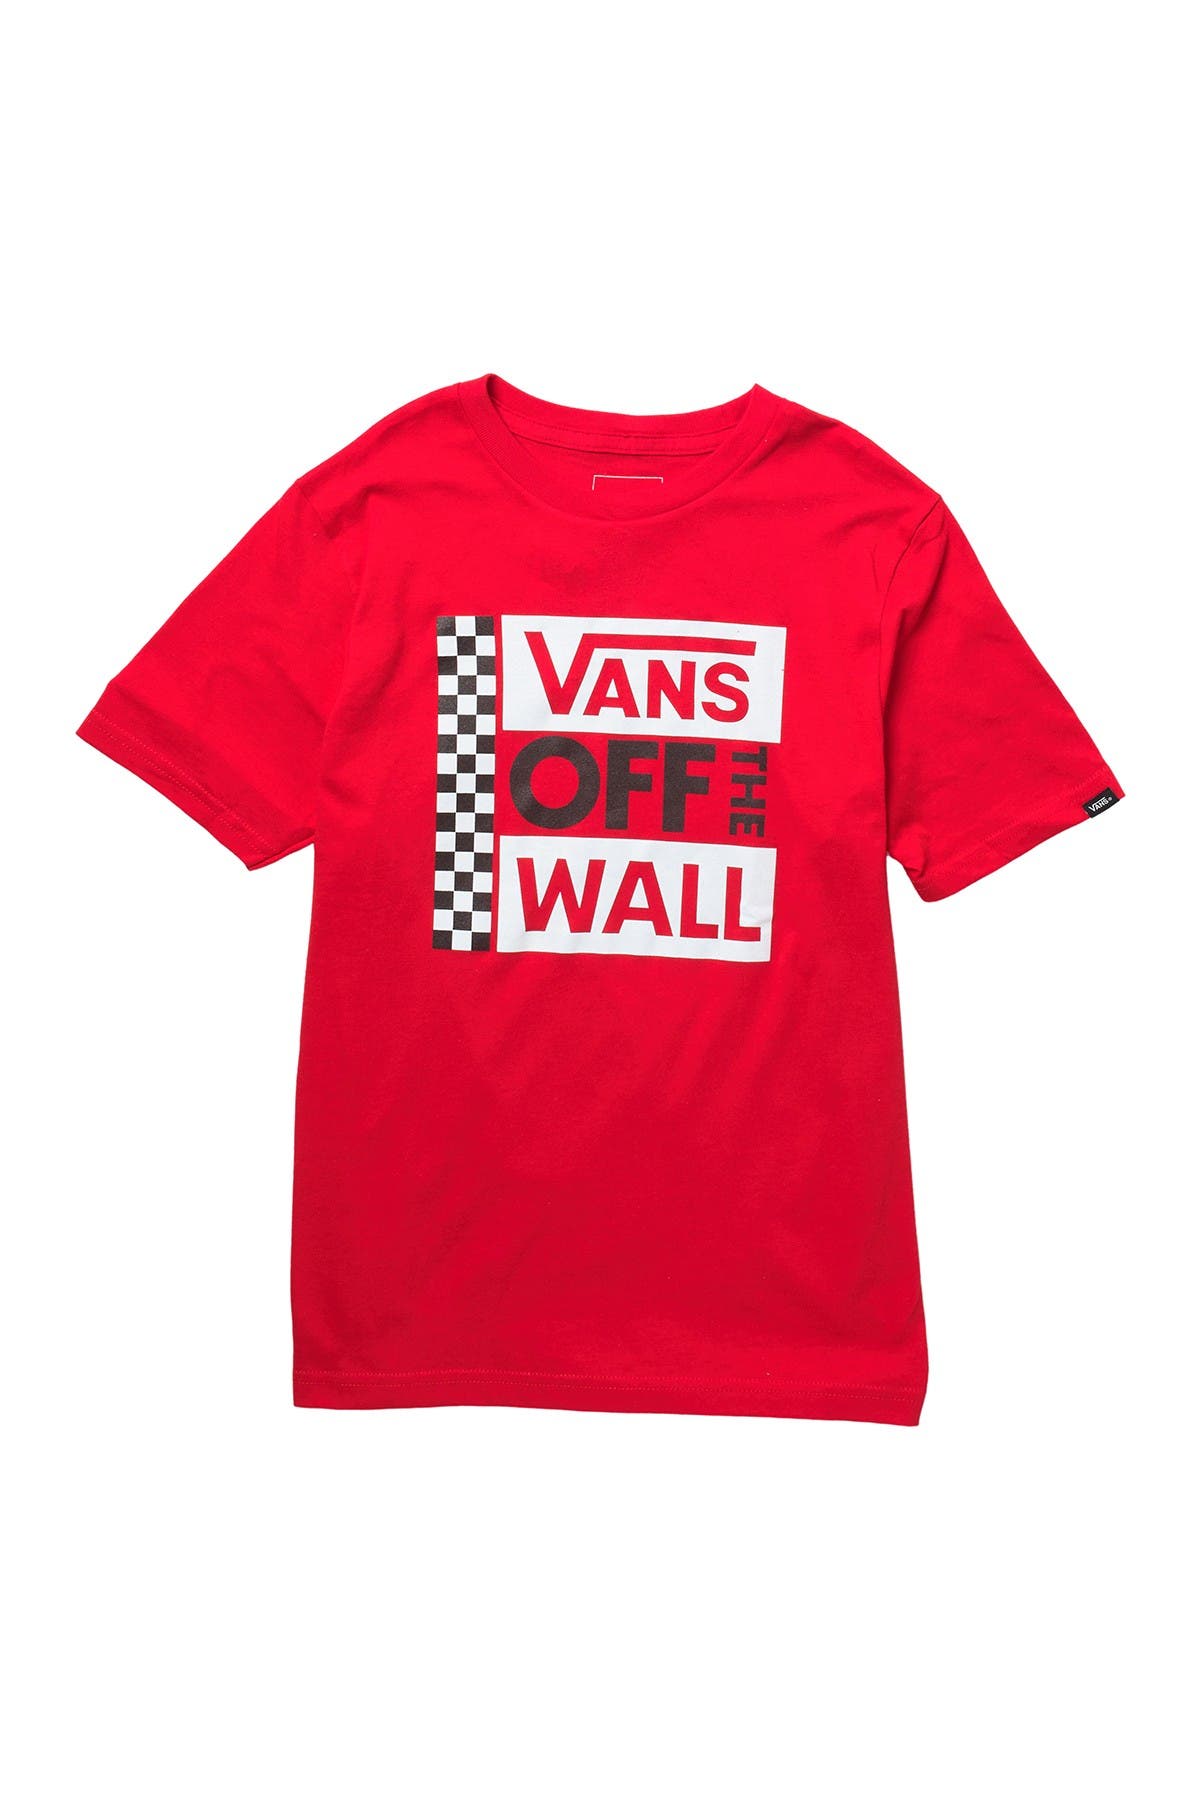 vans off the wall tee shirt